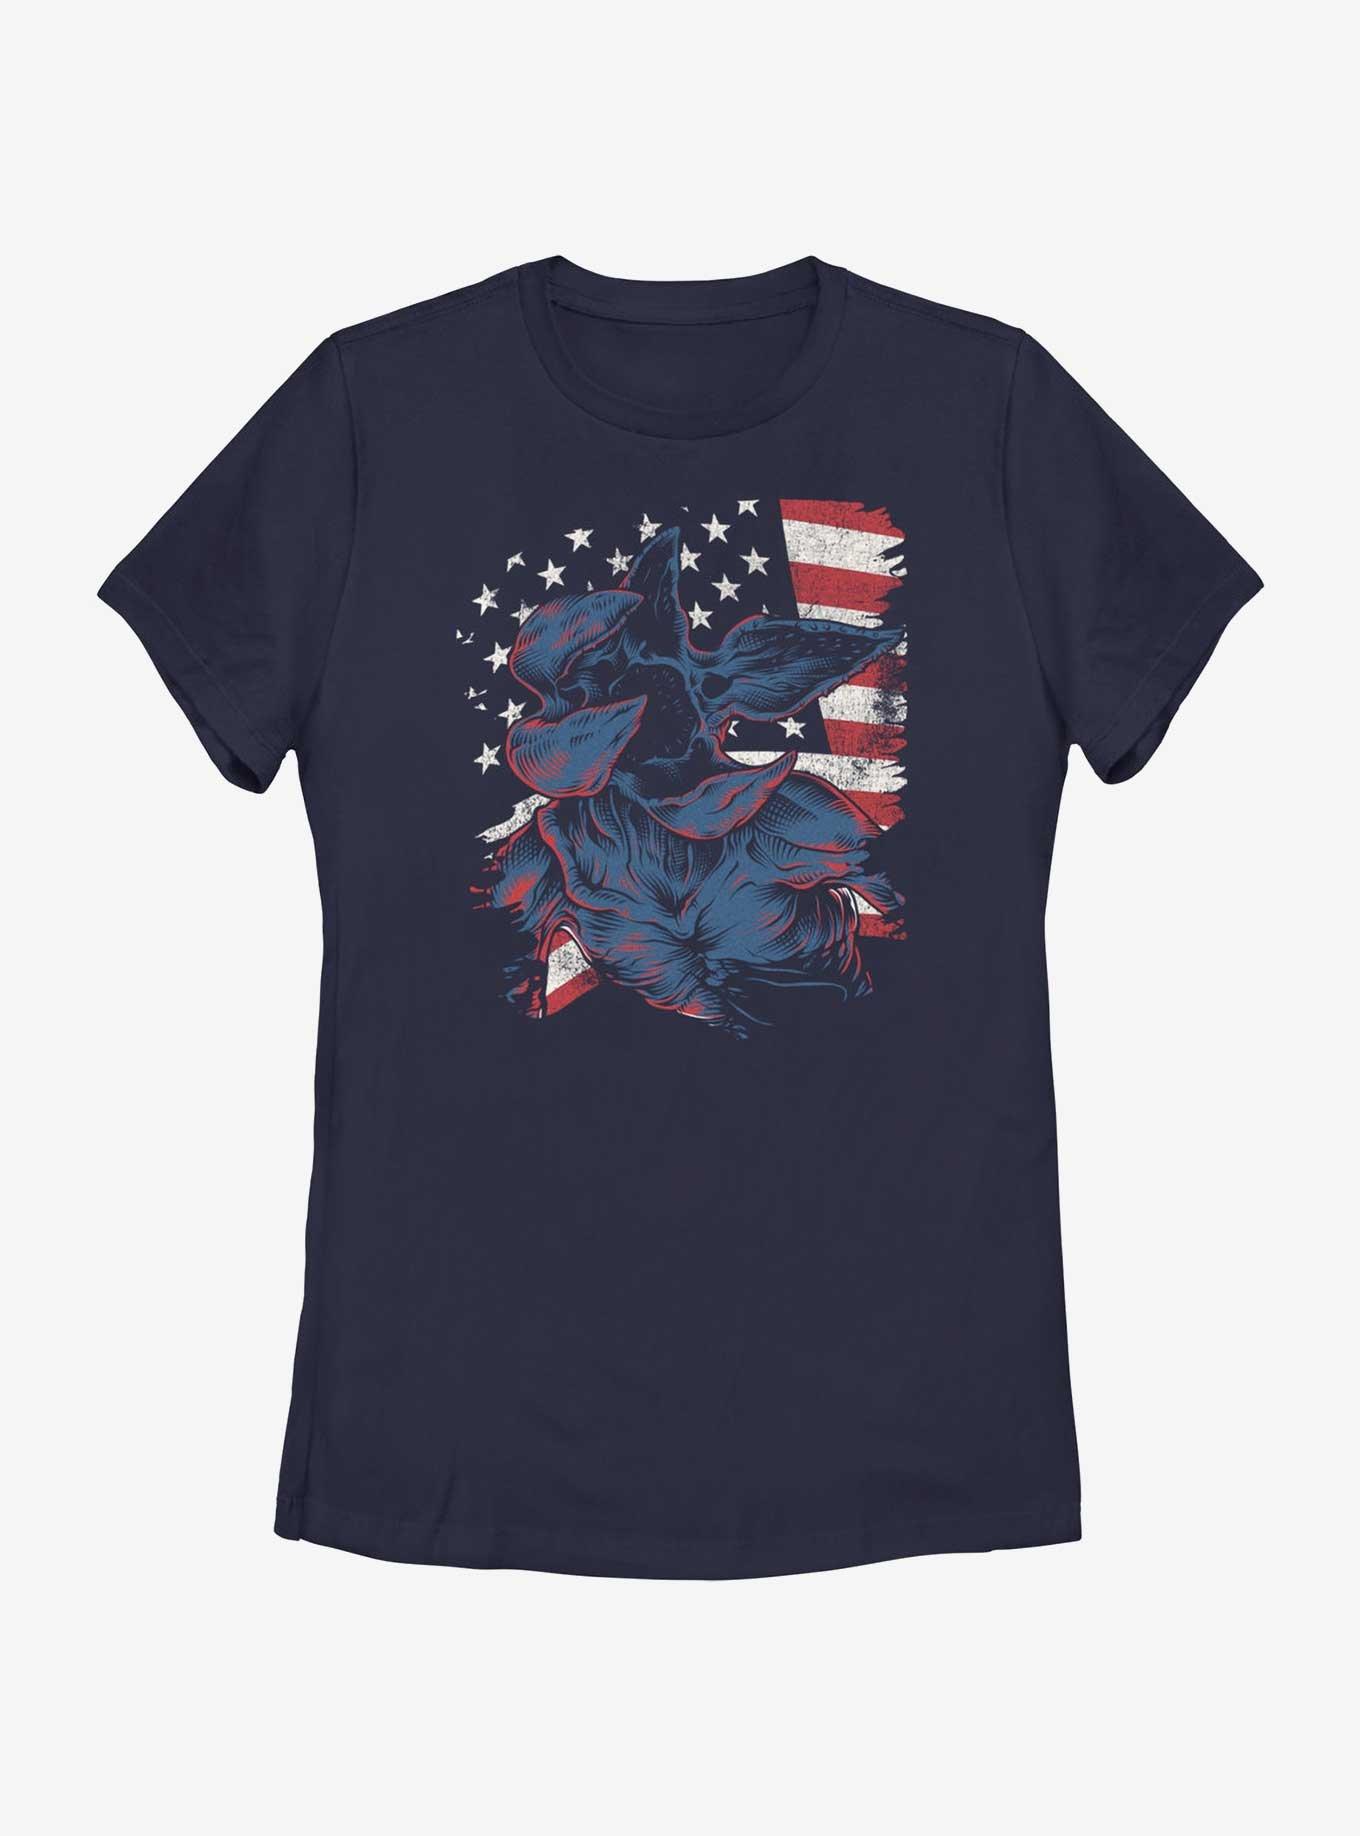 Stranger Things Demogorgon American Womens T-Shirt, , hi-res